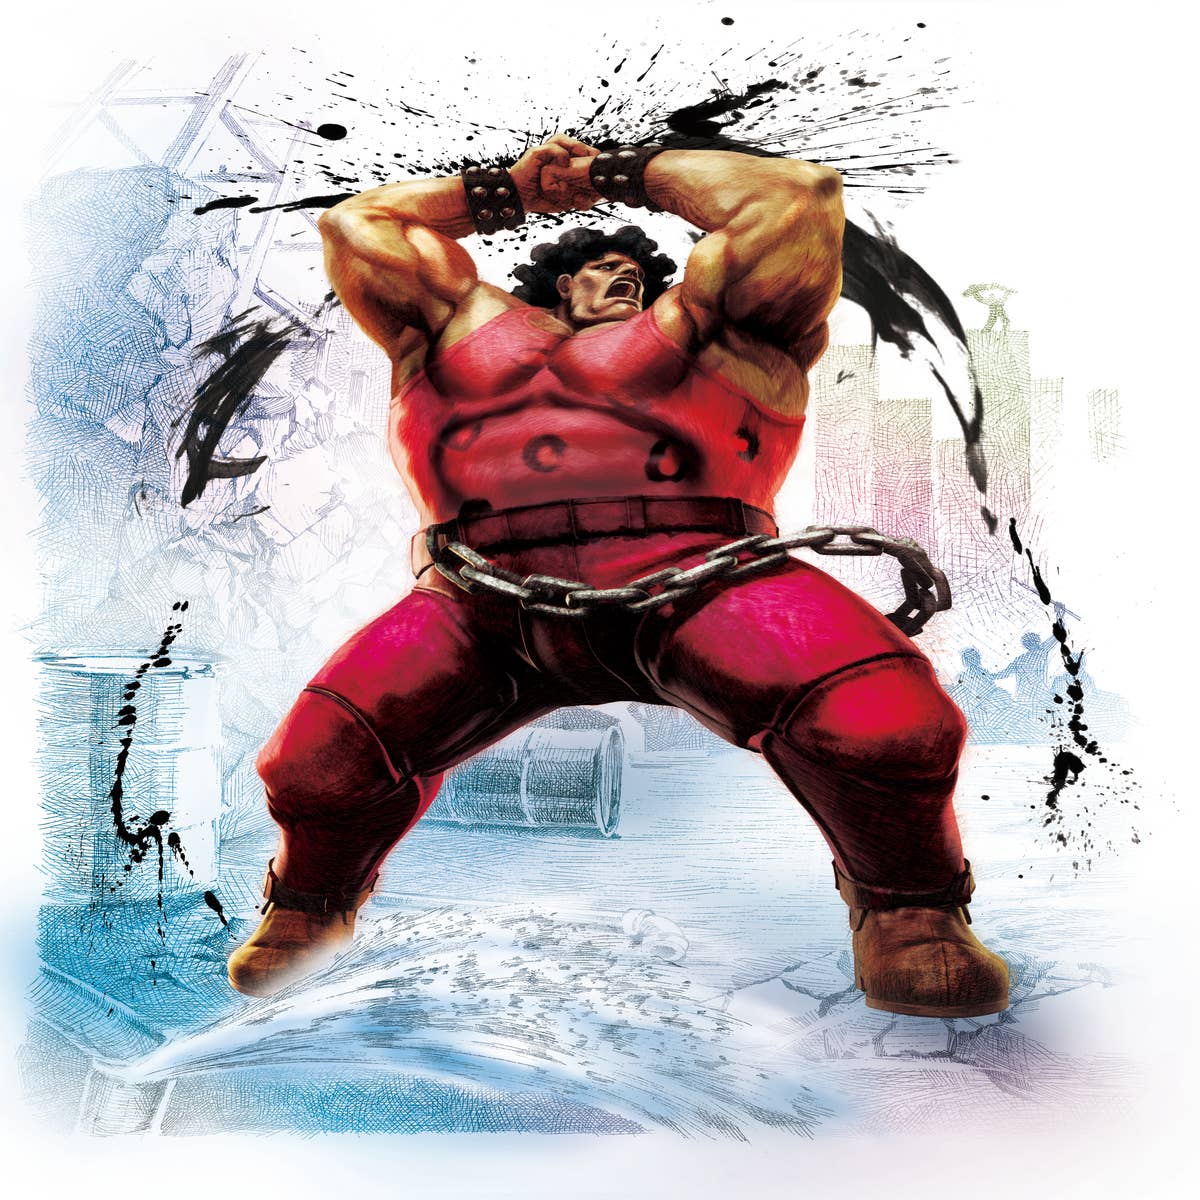 Super Street Fighter IV Concept Art